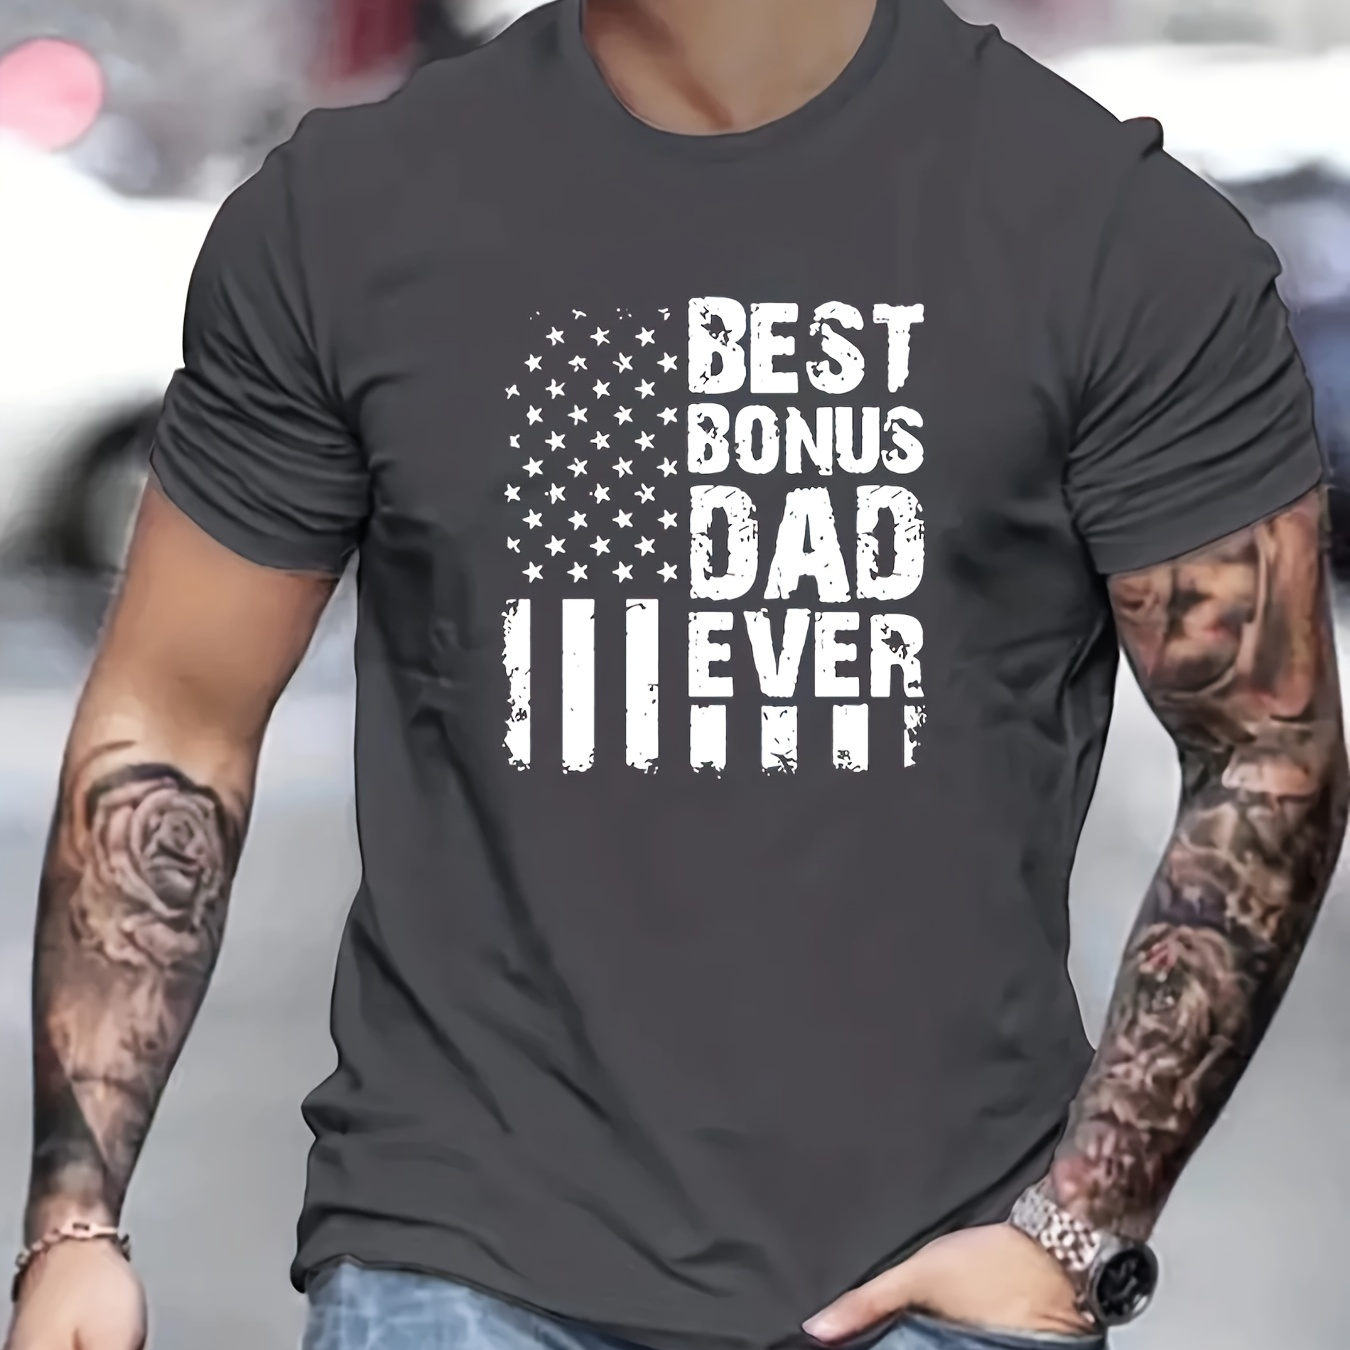 

Best Bonus Dad Ever Print T Shirt, Tees For Men, Casual Short Sleeve T-shirt For Summer